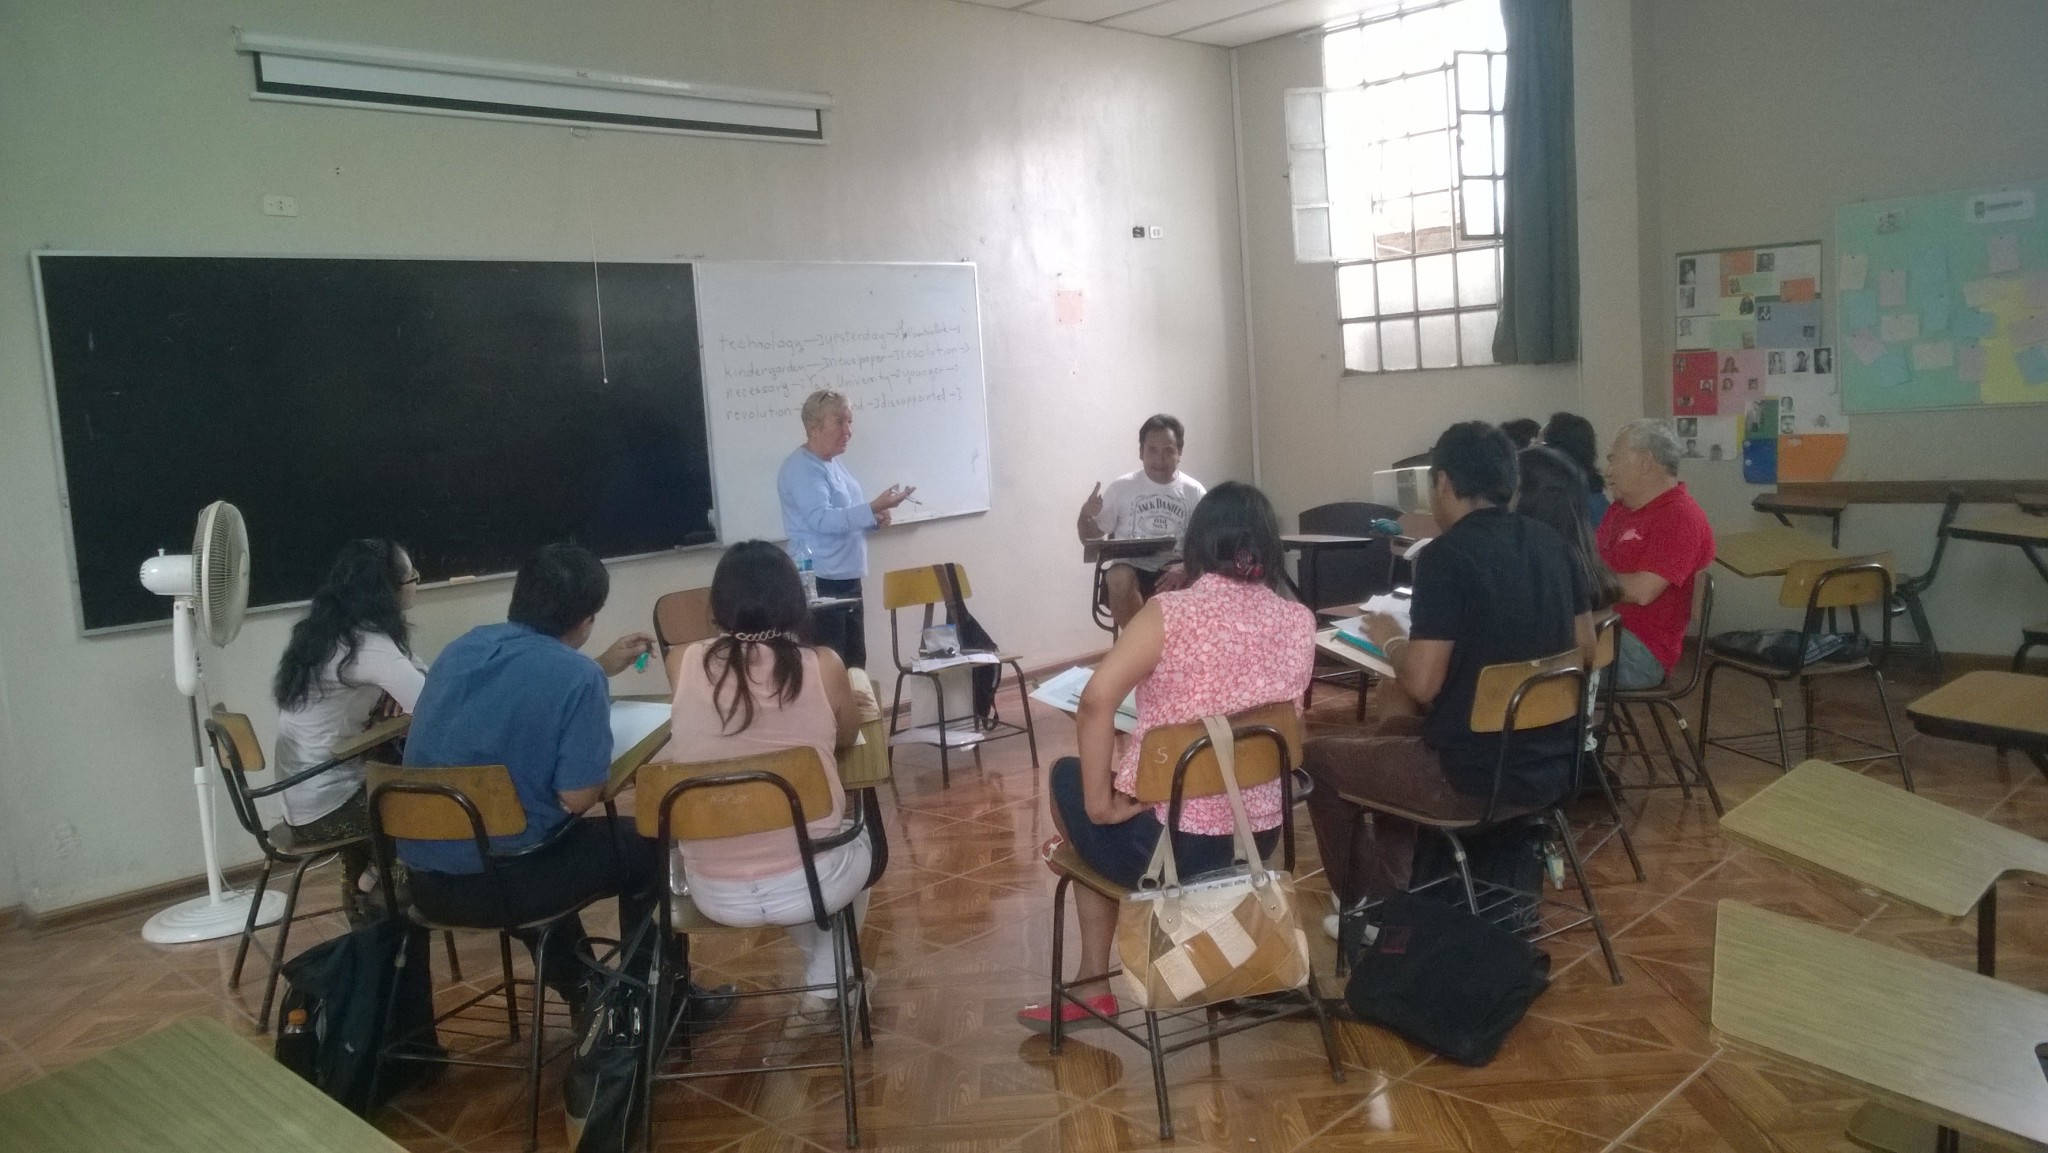 Teaching English at a University in Peru